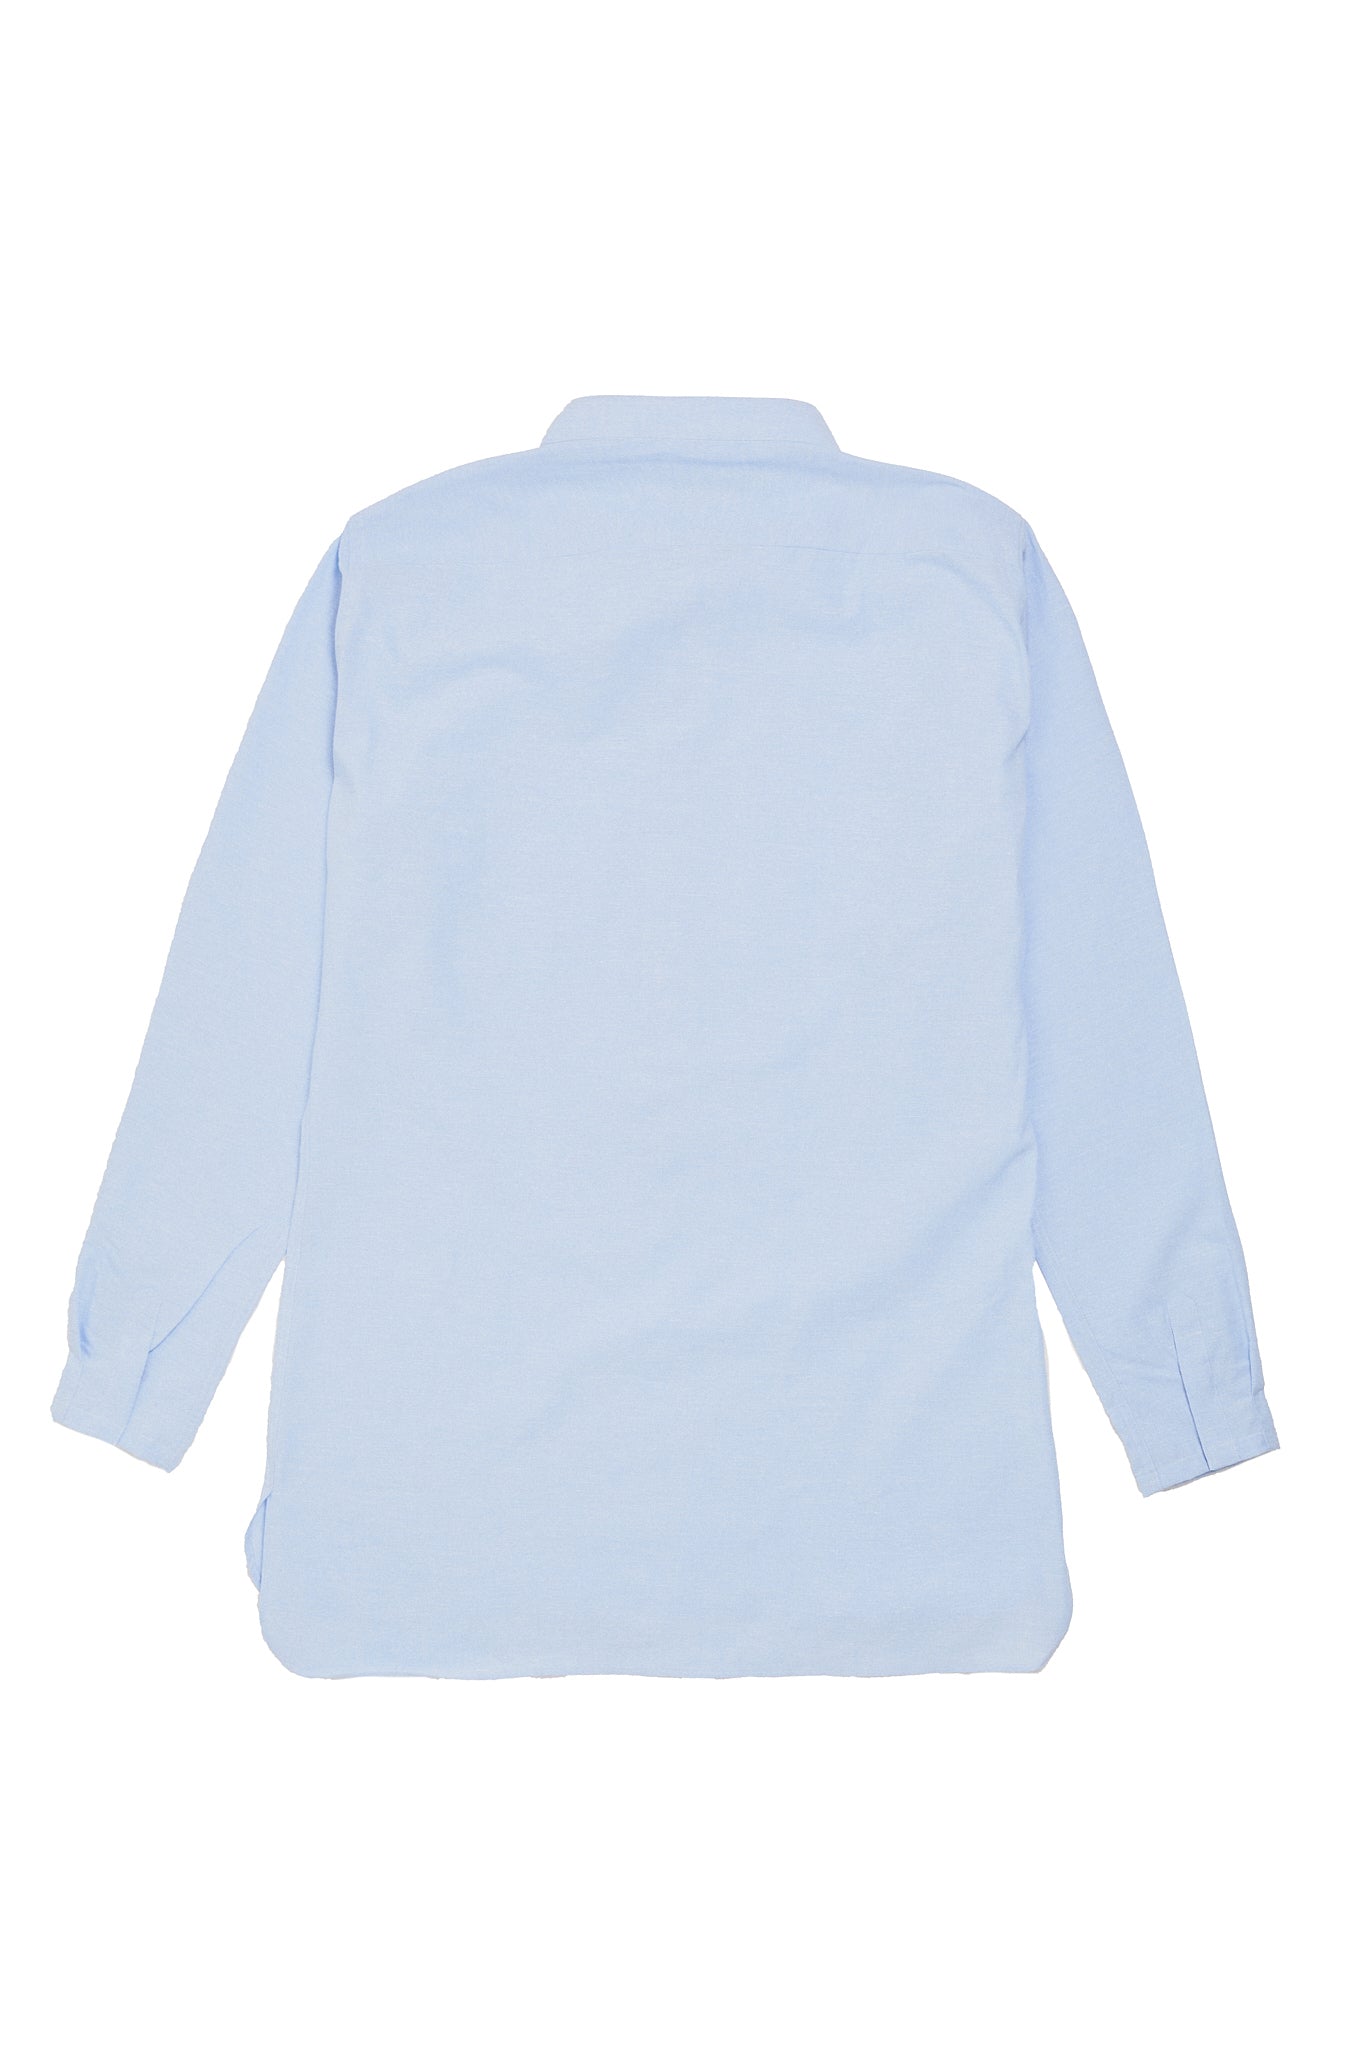 Camisa Mao lino bicolor azul blanco Made to Order